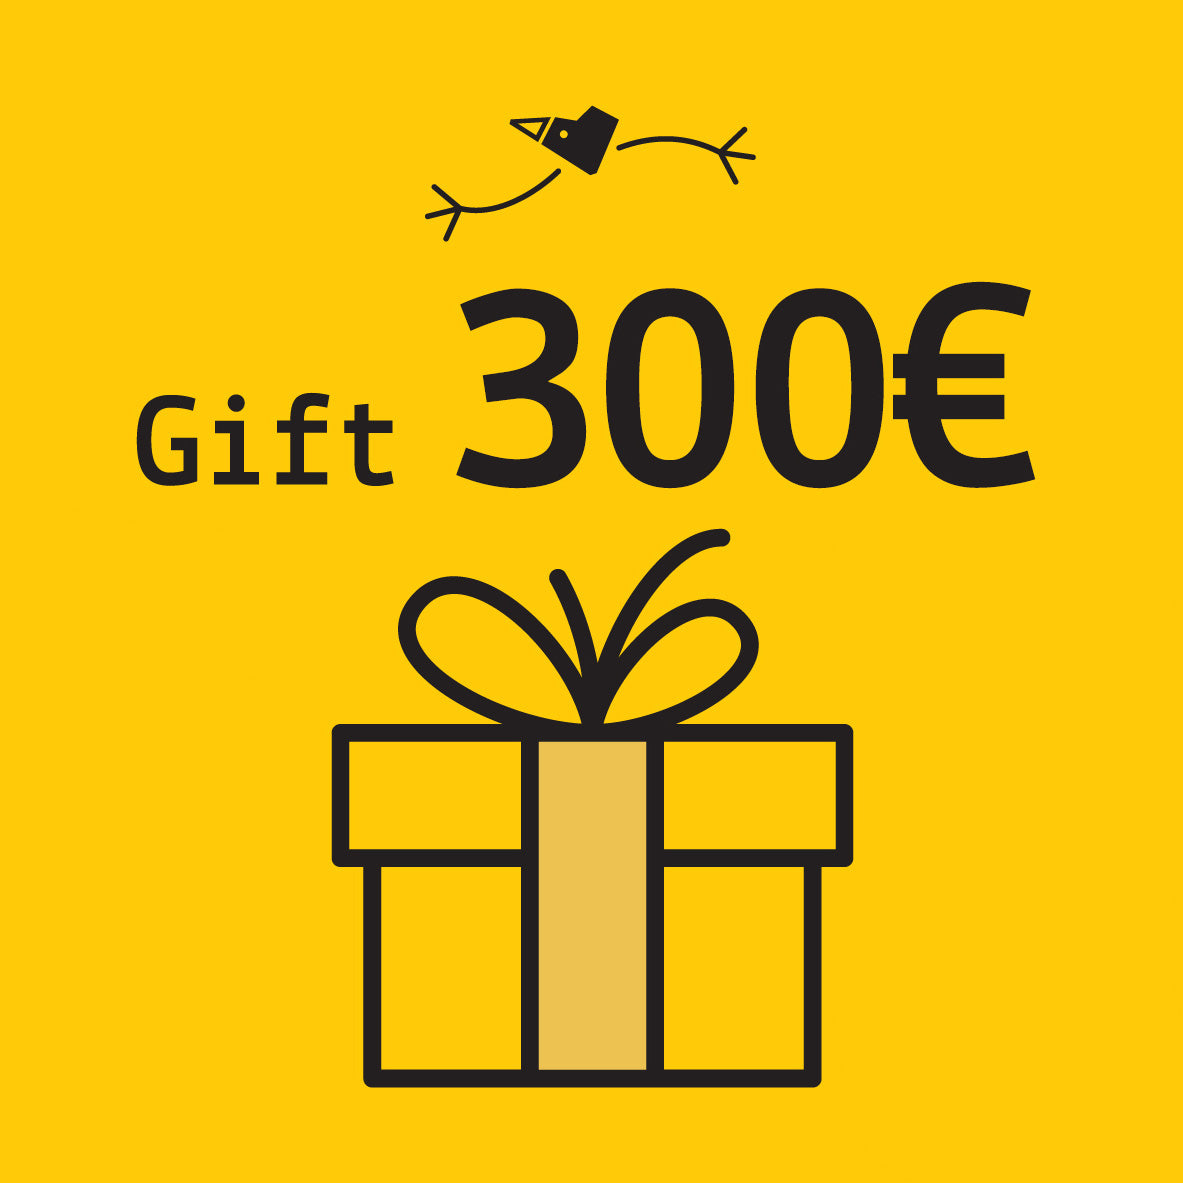 Gift Card - 300€